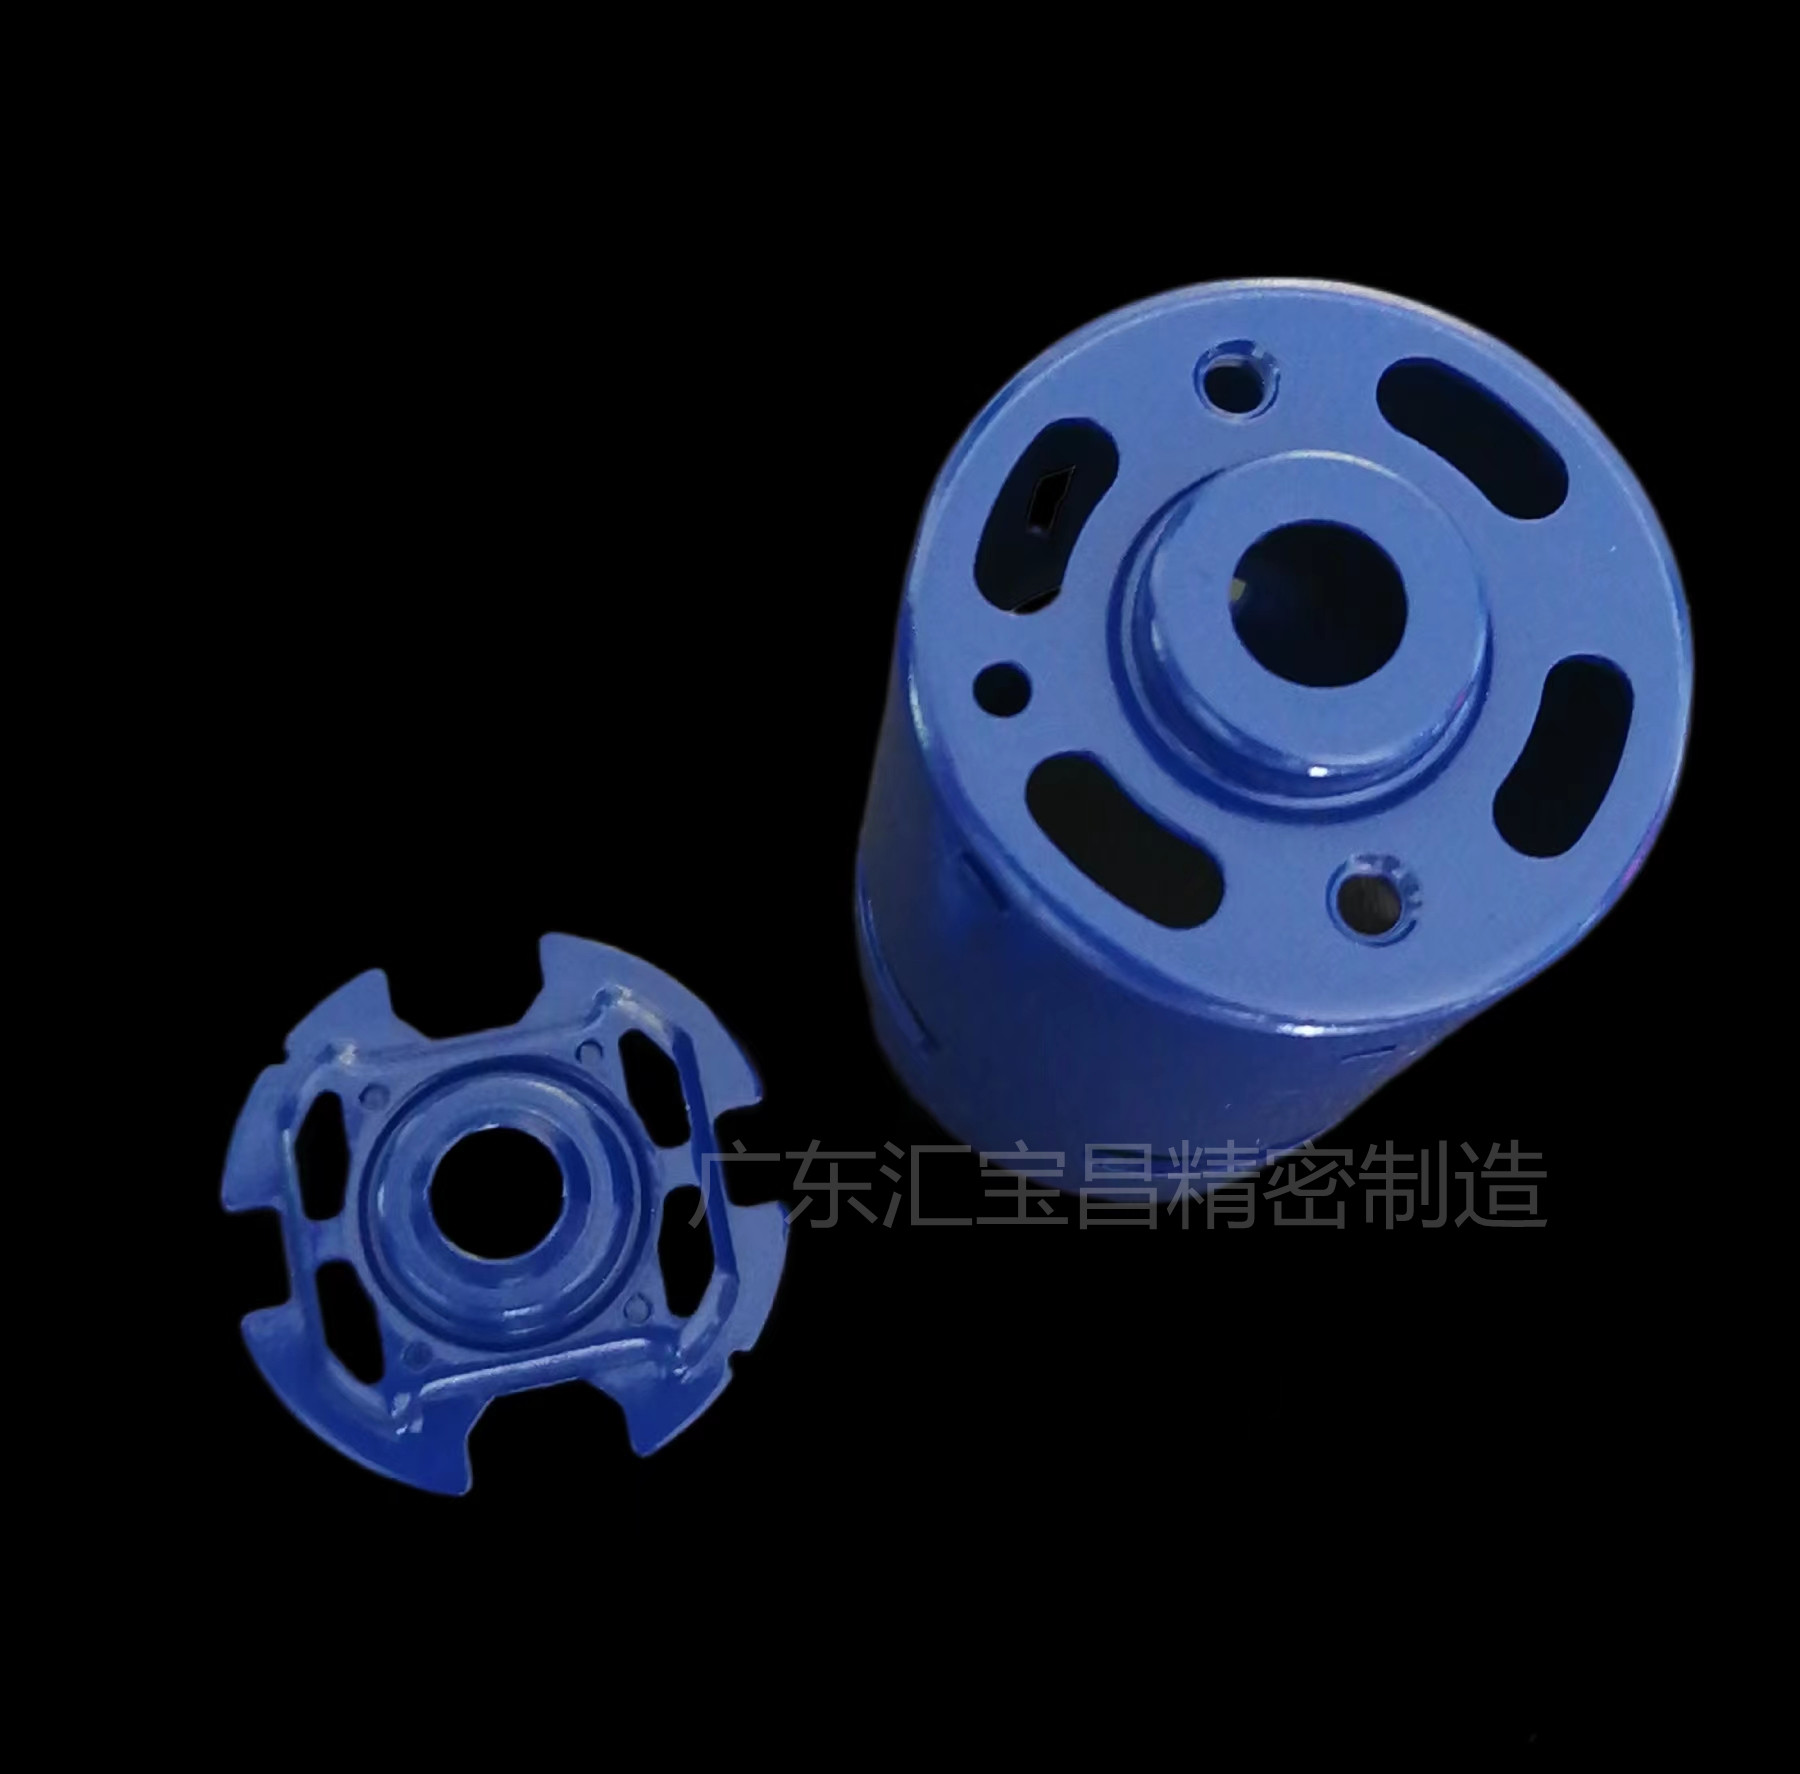 775 double notch shell iron cover appearance: sapphire blue – huibaochang appearance technology